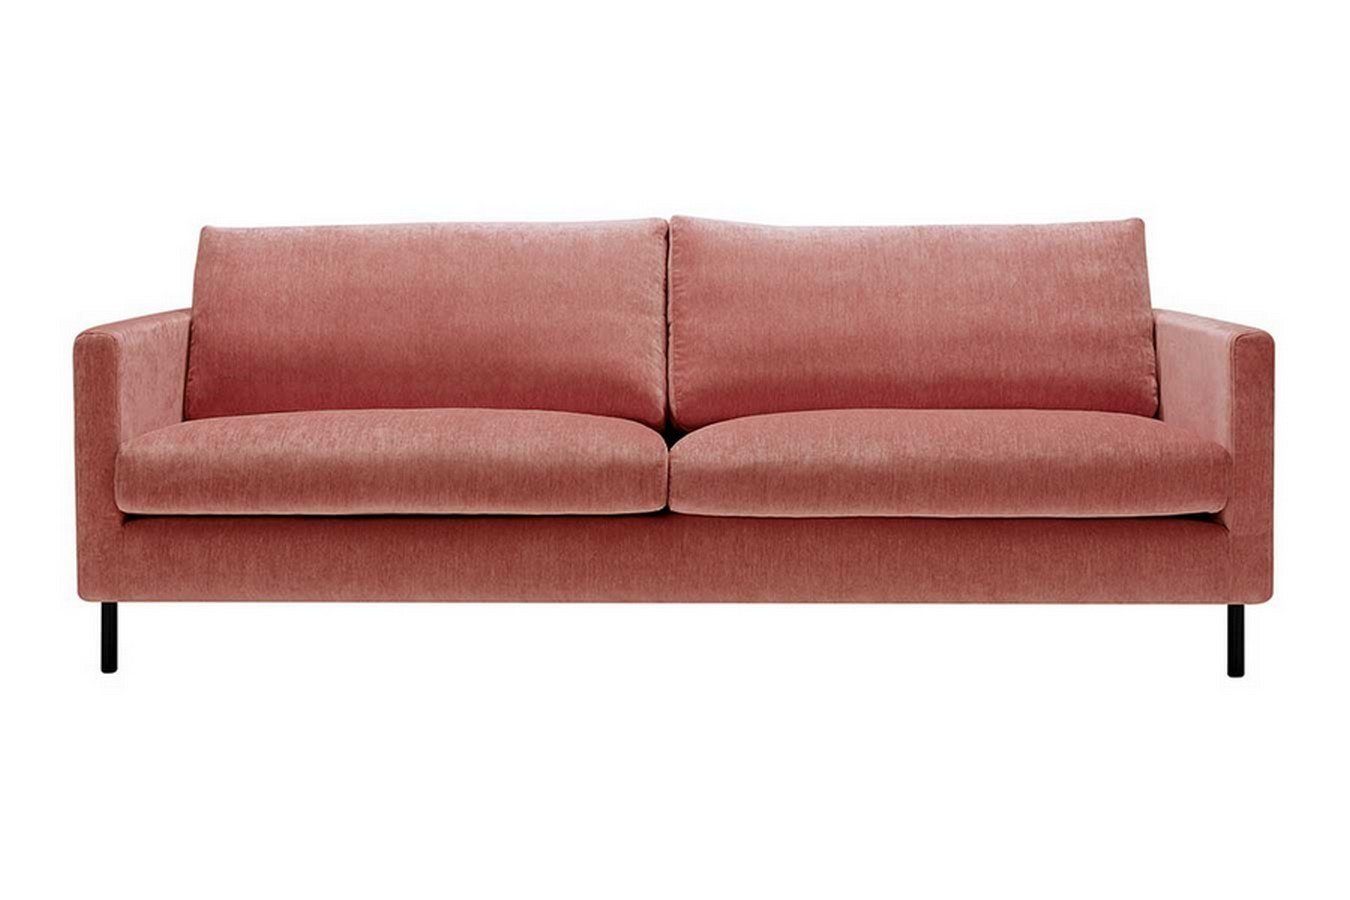 Stoff daslagerhaus Impala rot Elyot Sitzer living Big-Sofa Sofa 3